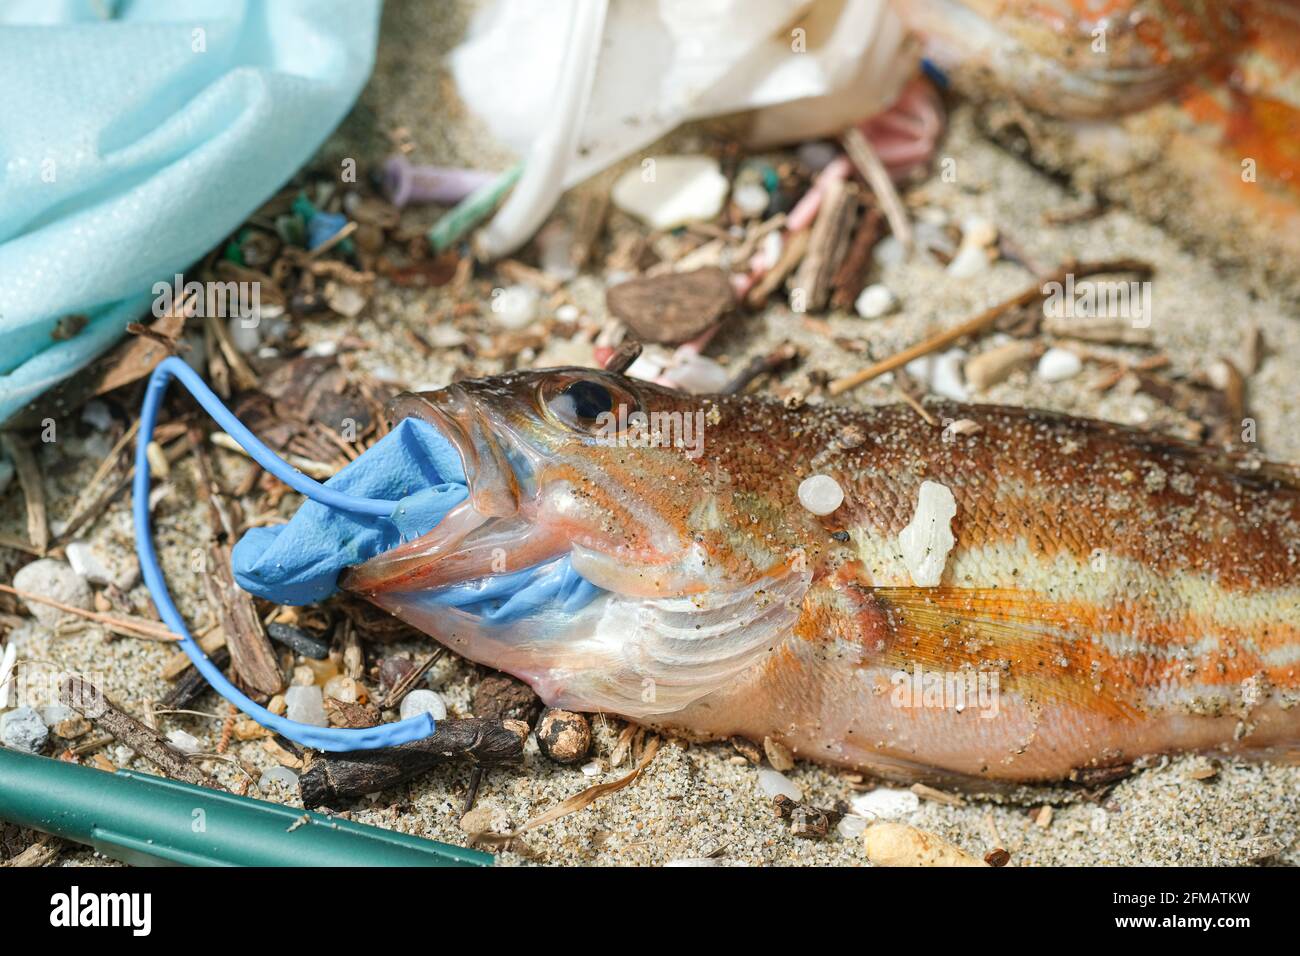 Comber perch fish dead eating plastic rubber disposal glove trash on a debris contaminated sea habitat.Nature pollution. Stock Photo